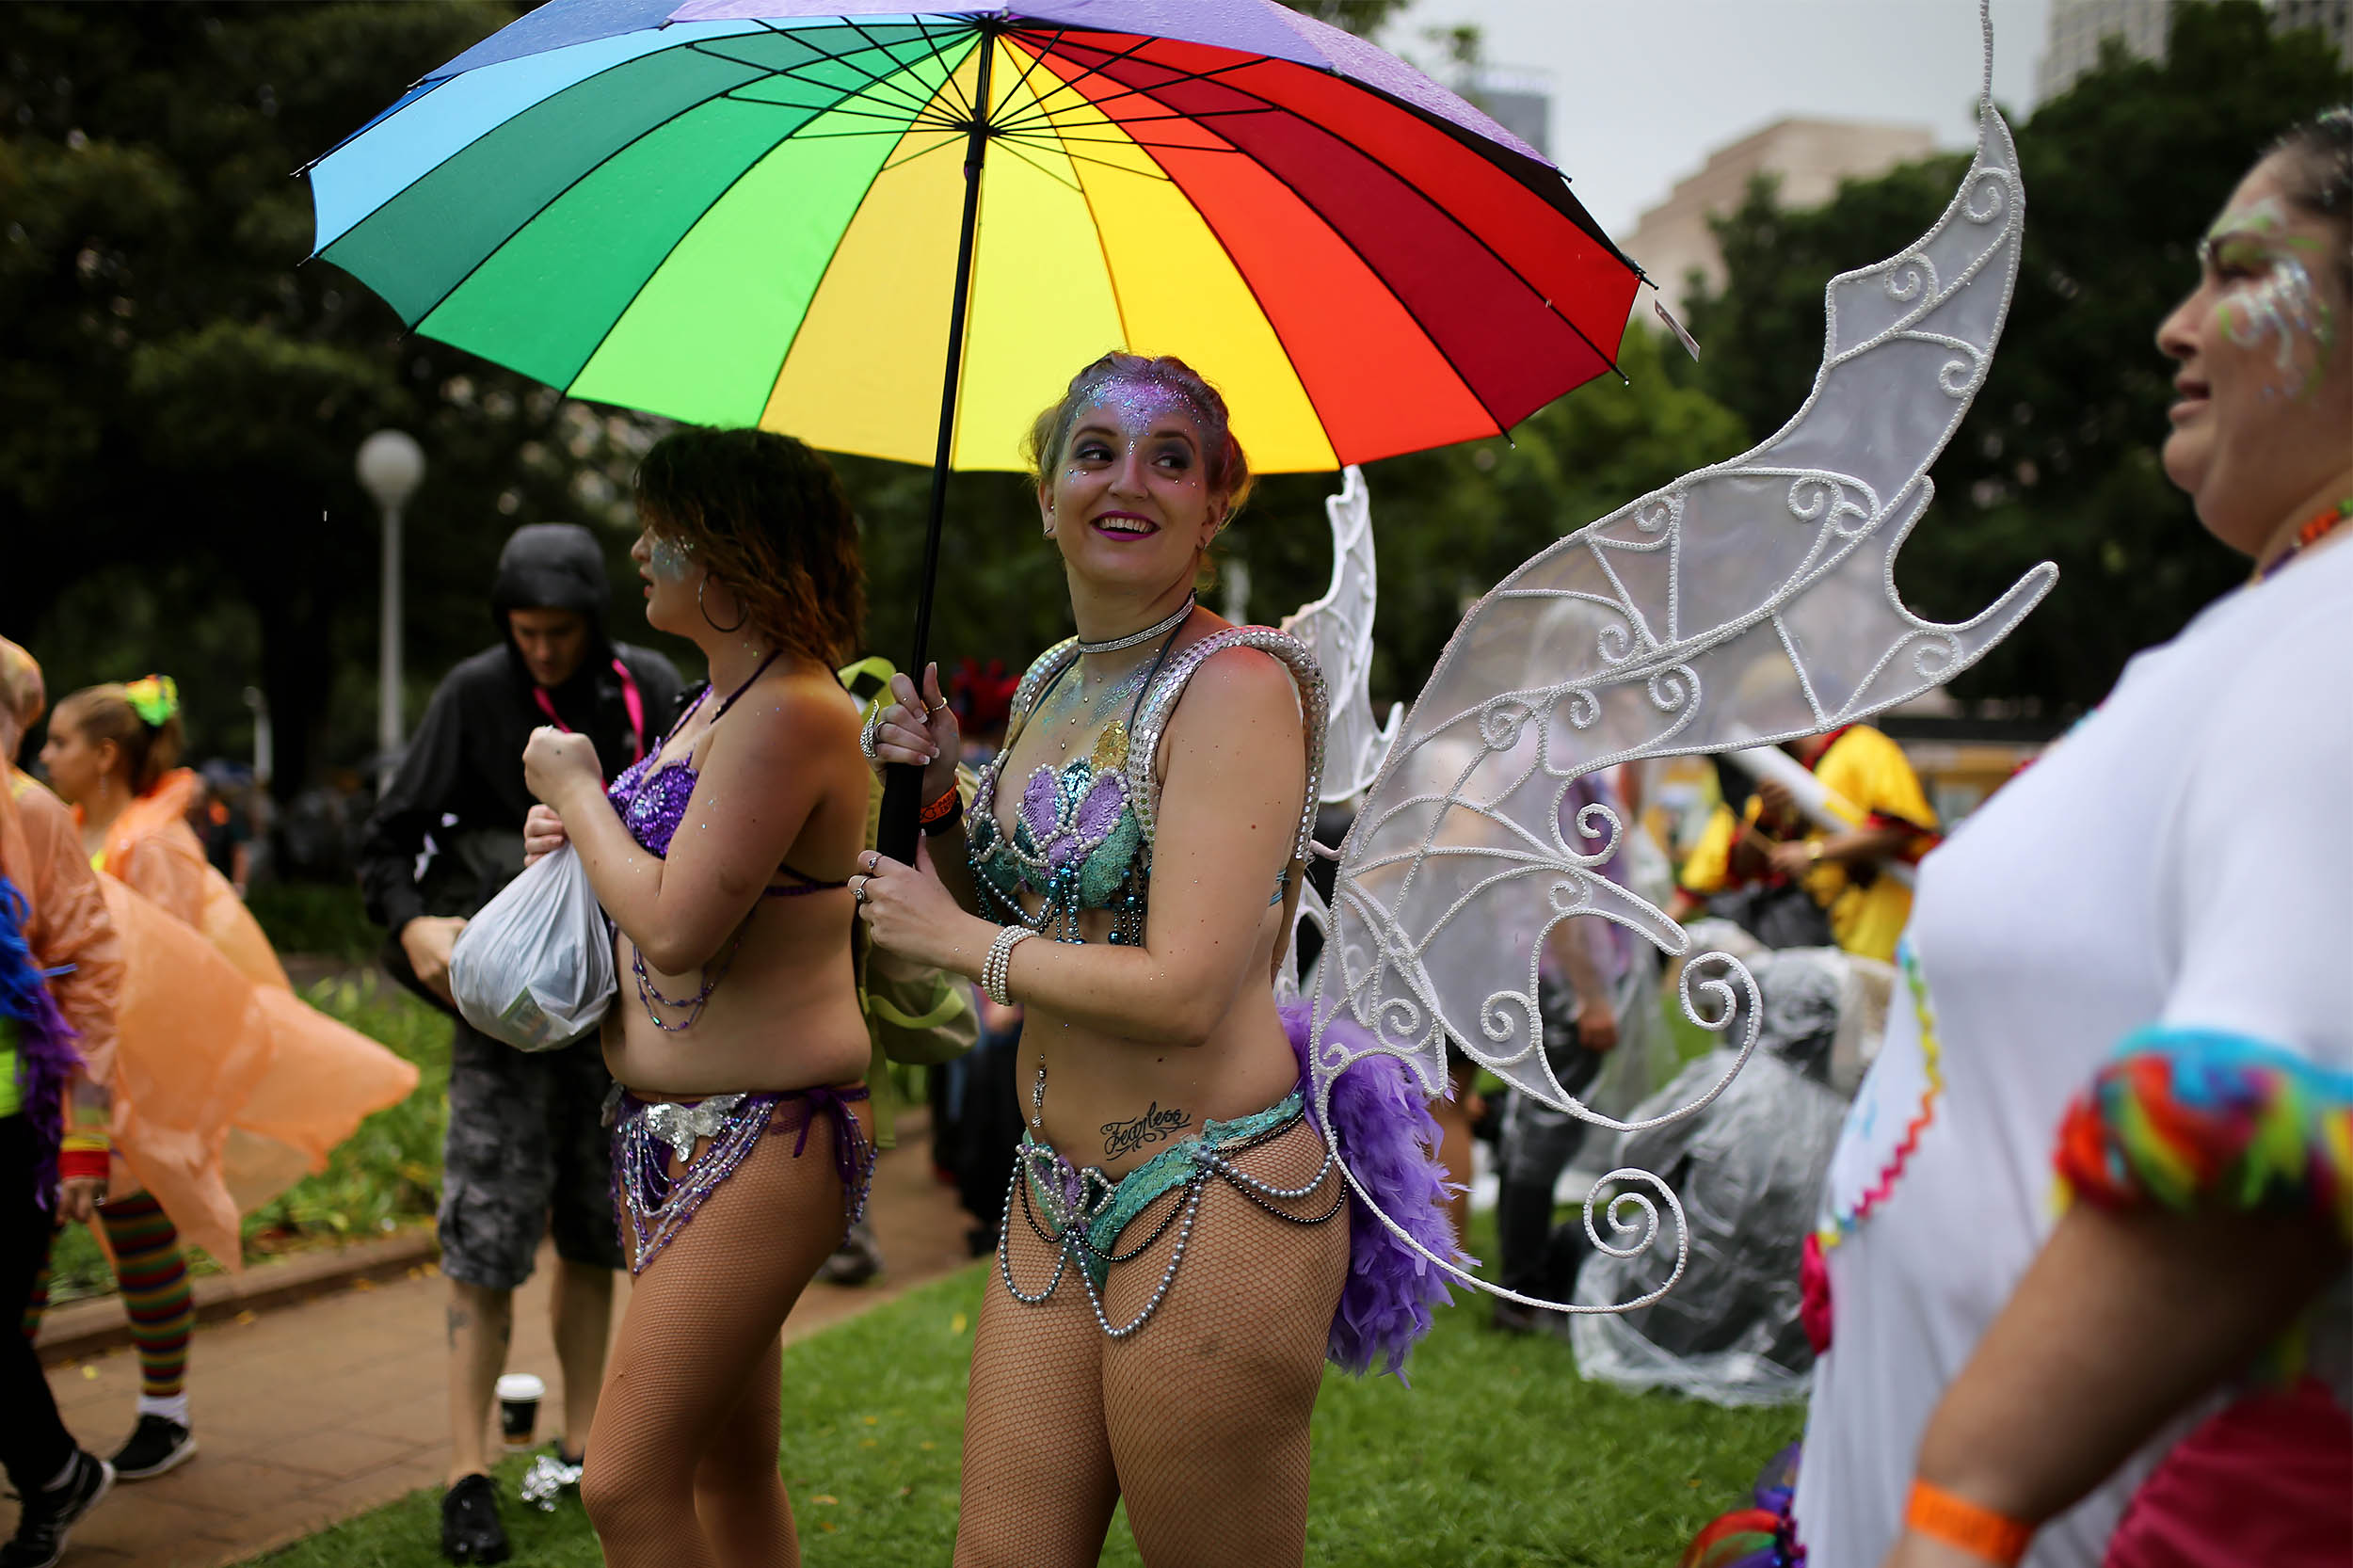  A participant holds a rainbow umbrella during the annual Sydney Gay and Lesbian Mardi Gras festival in Sydney, Australia. 